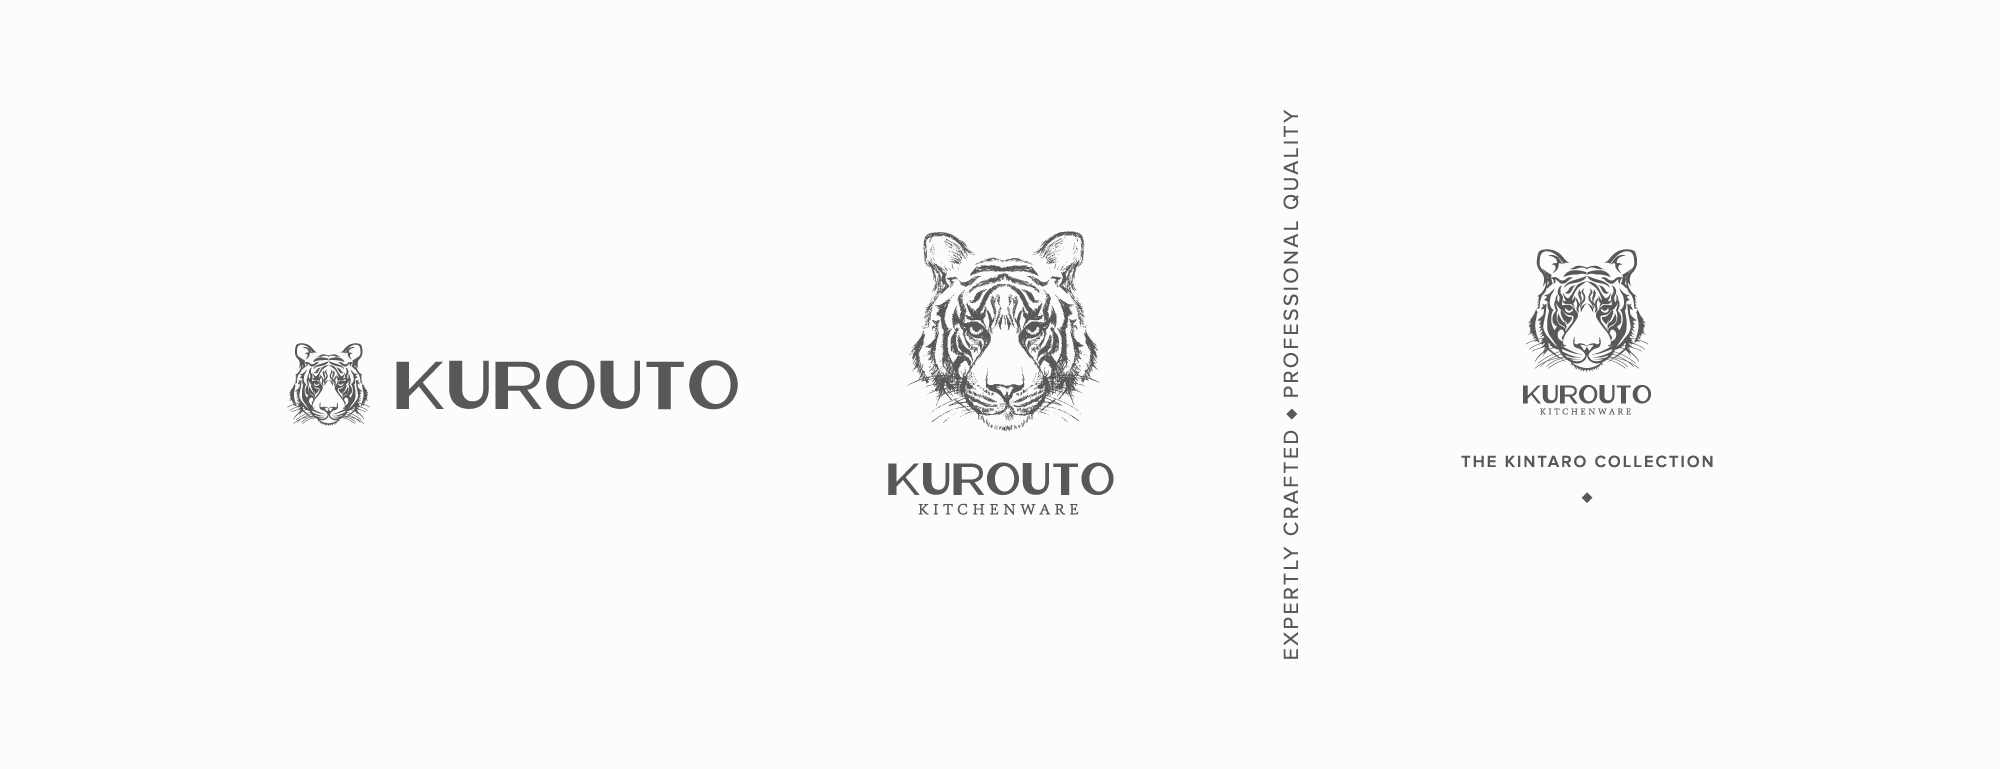 Kurouto Kitchenware Brand Identity Logo Secondary Marks